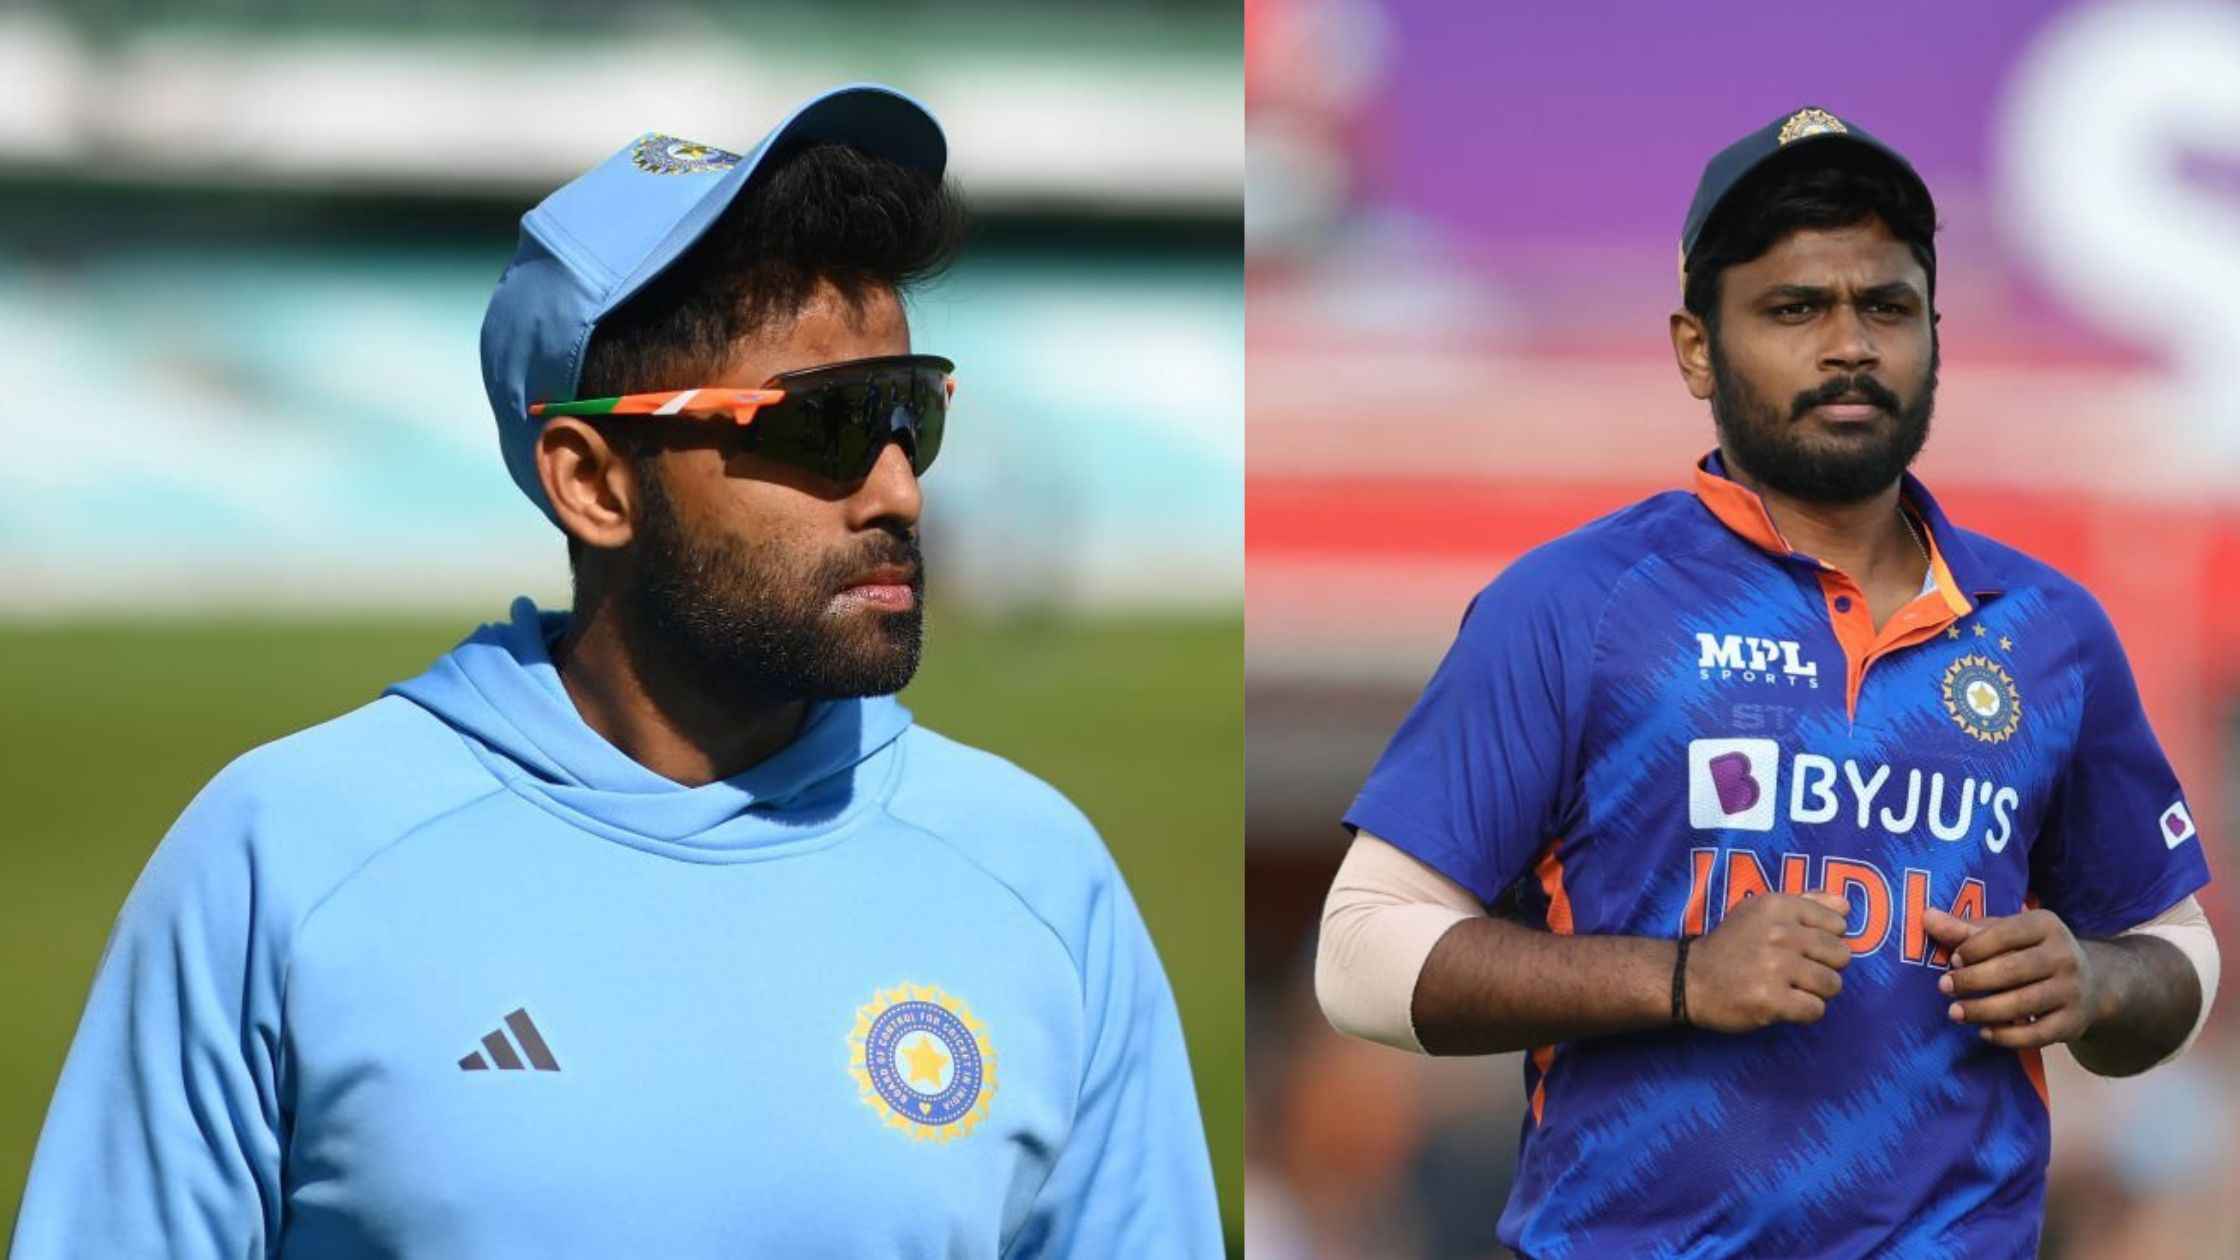 Why Suryakumar Yadav wore Sanju Samson's jersey in the 1st ODI between India vs West Indies